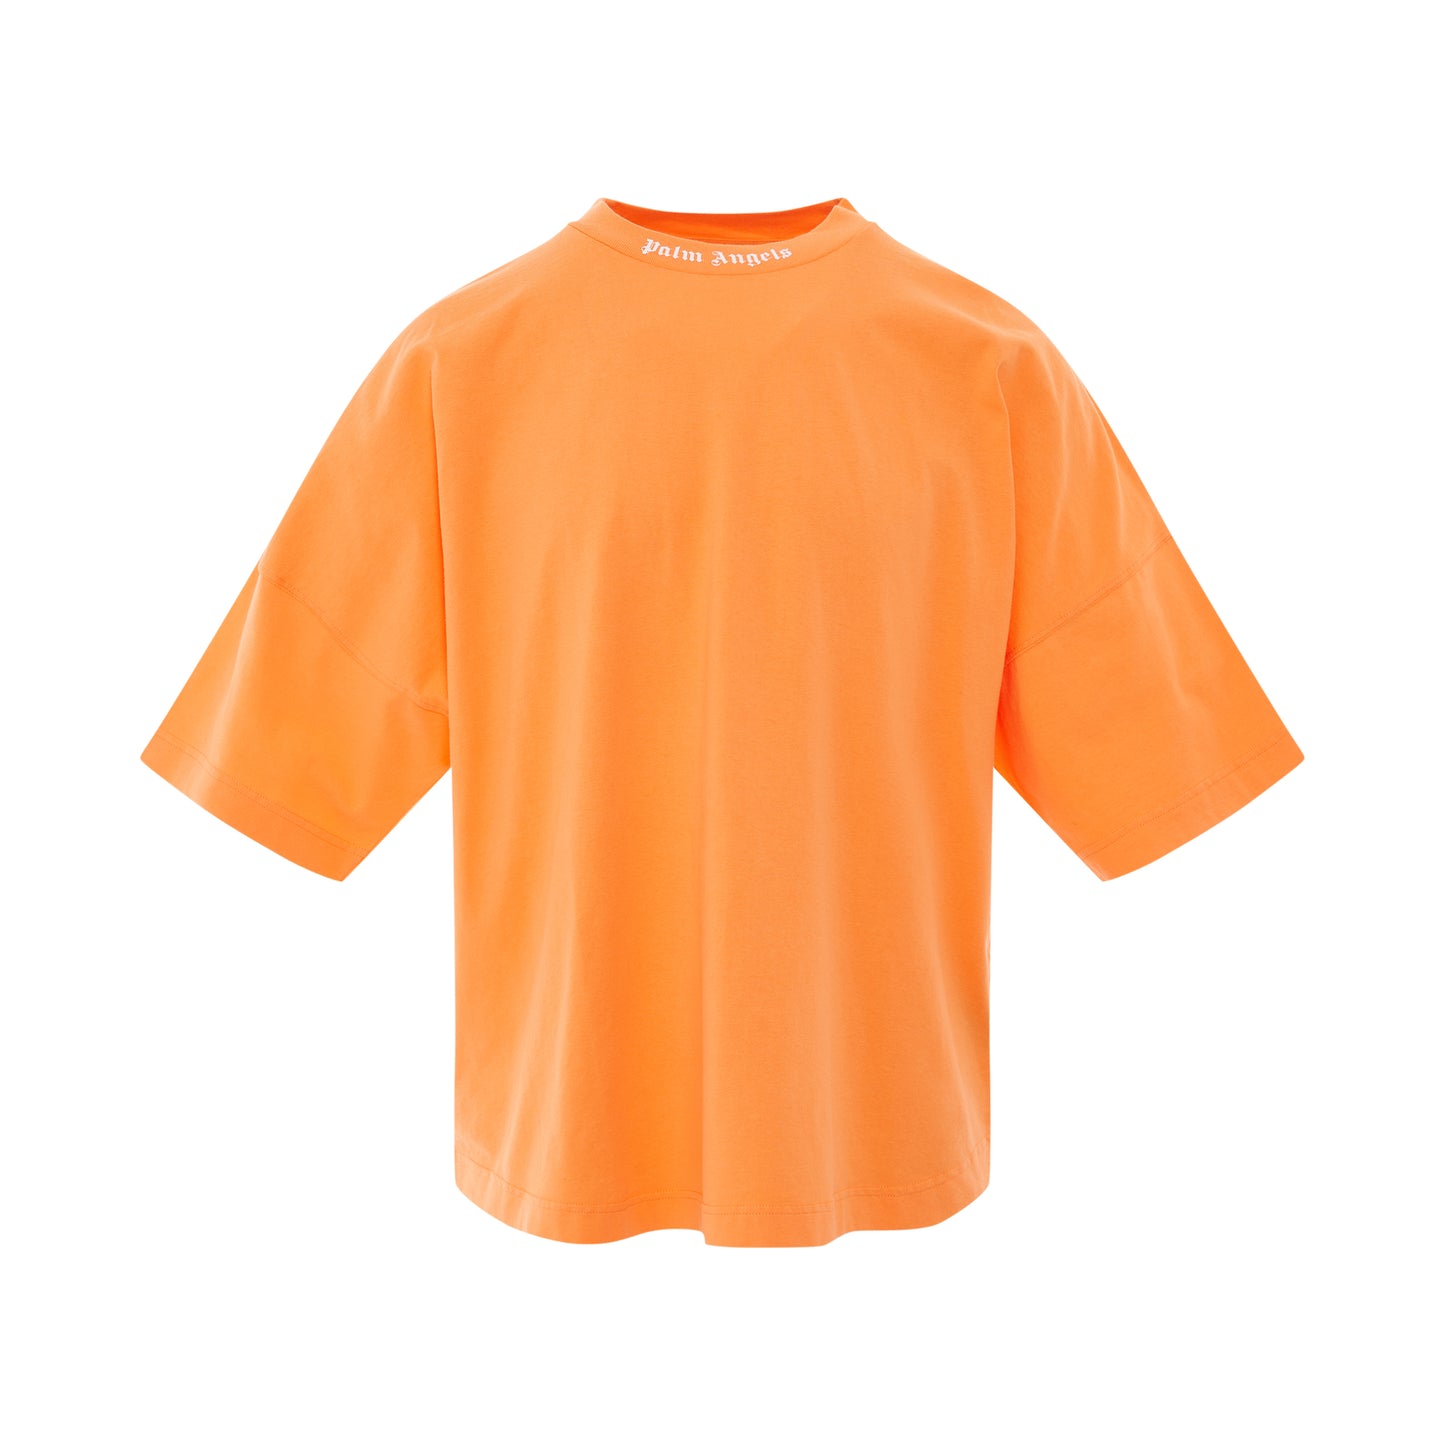 Classic Logo Oversize T-Shirt in Mock Orange/White